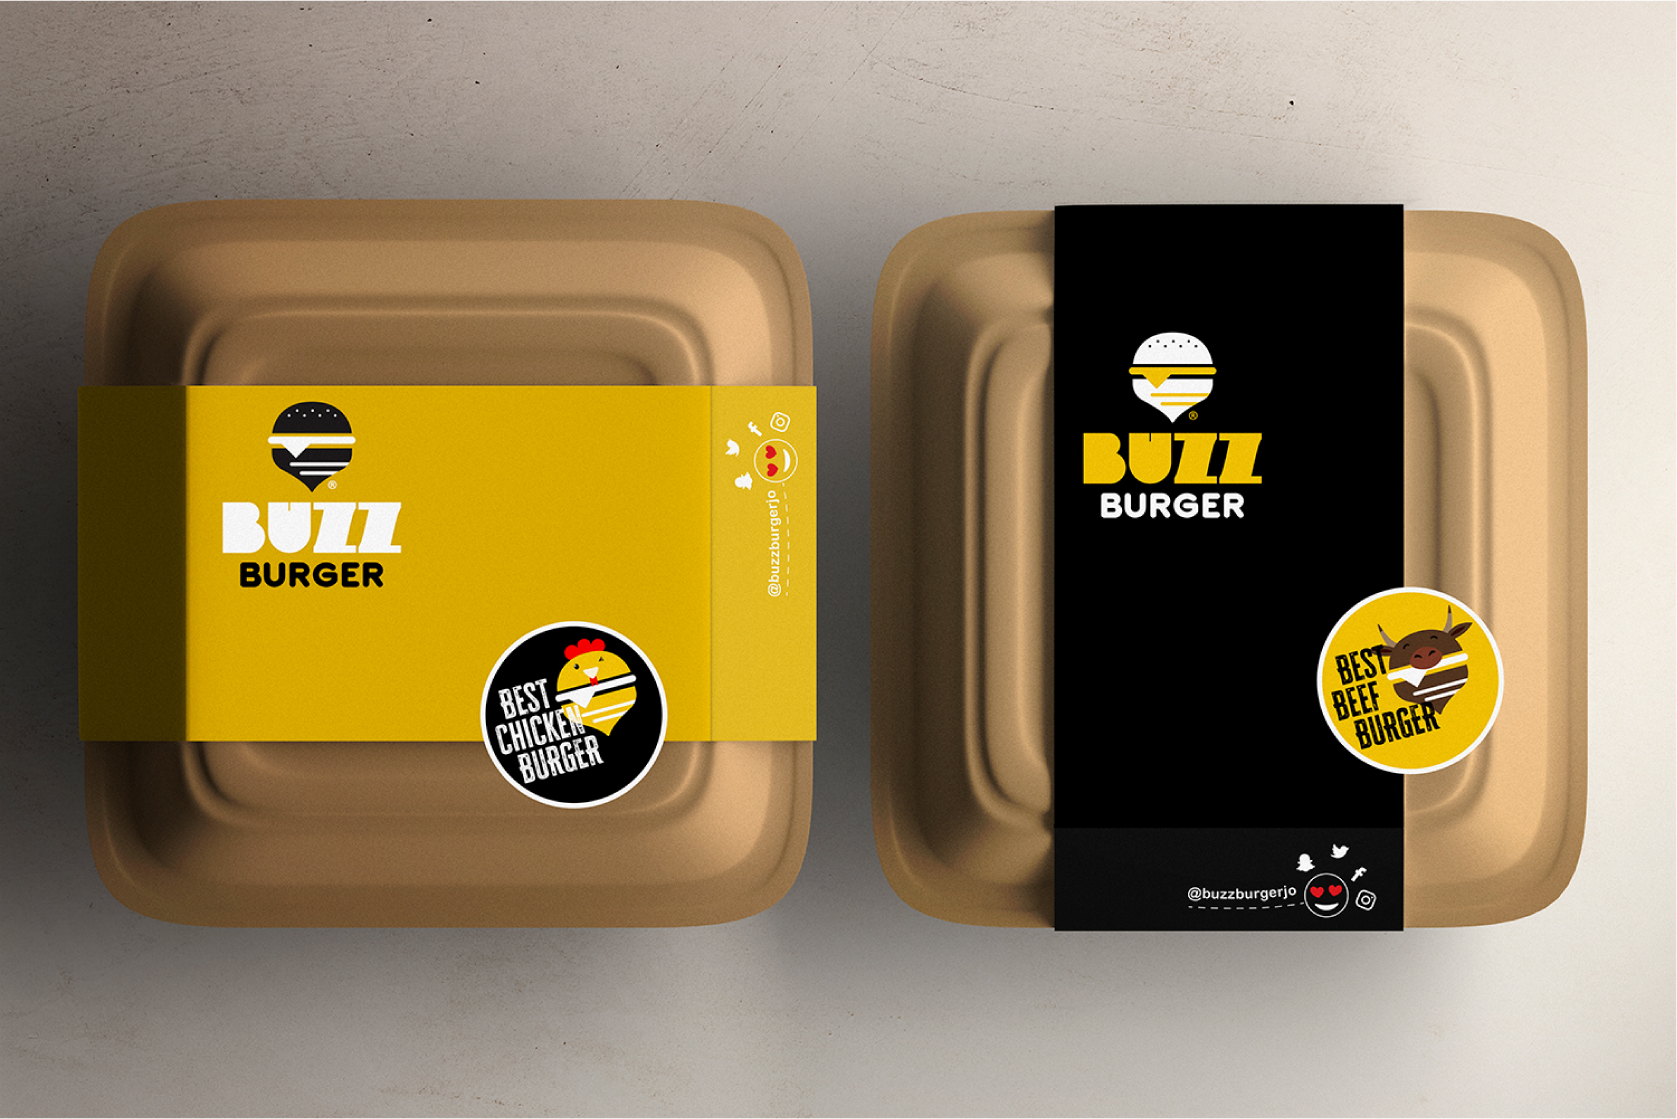 Buzz_Burger_Package_Burger_Box_design